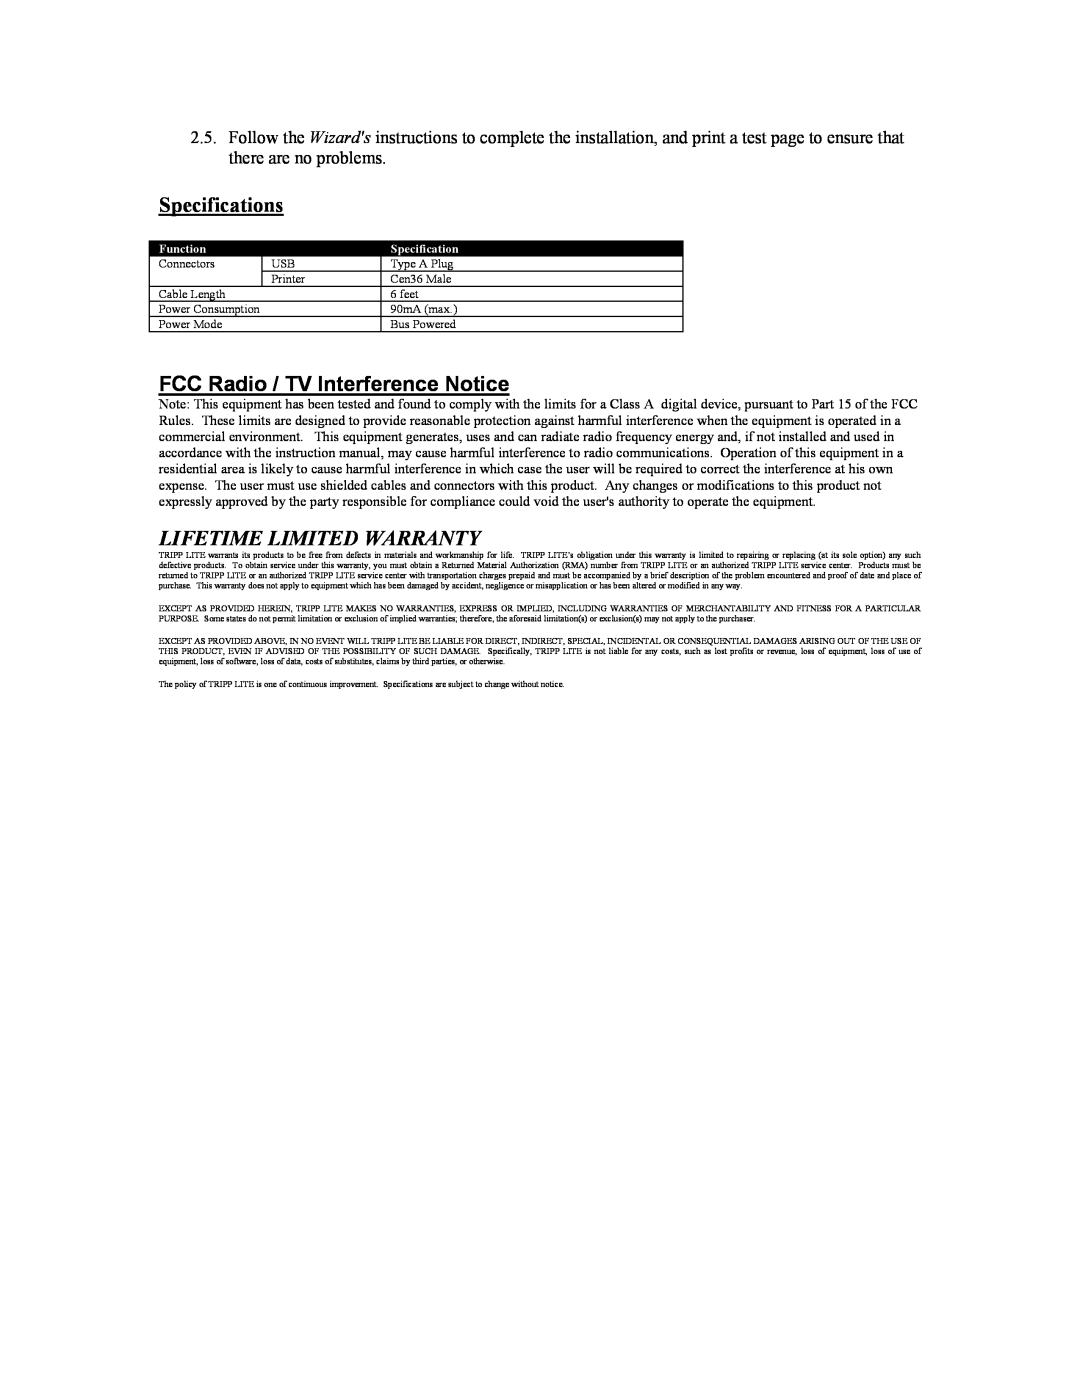 Tripp Lite U206-006-R user manual Specifications, FCC Radio / TV Interference Notice, Lifetime Limited Warranty 